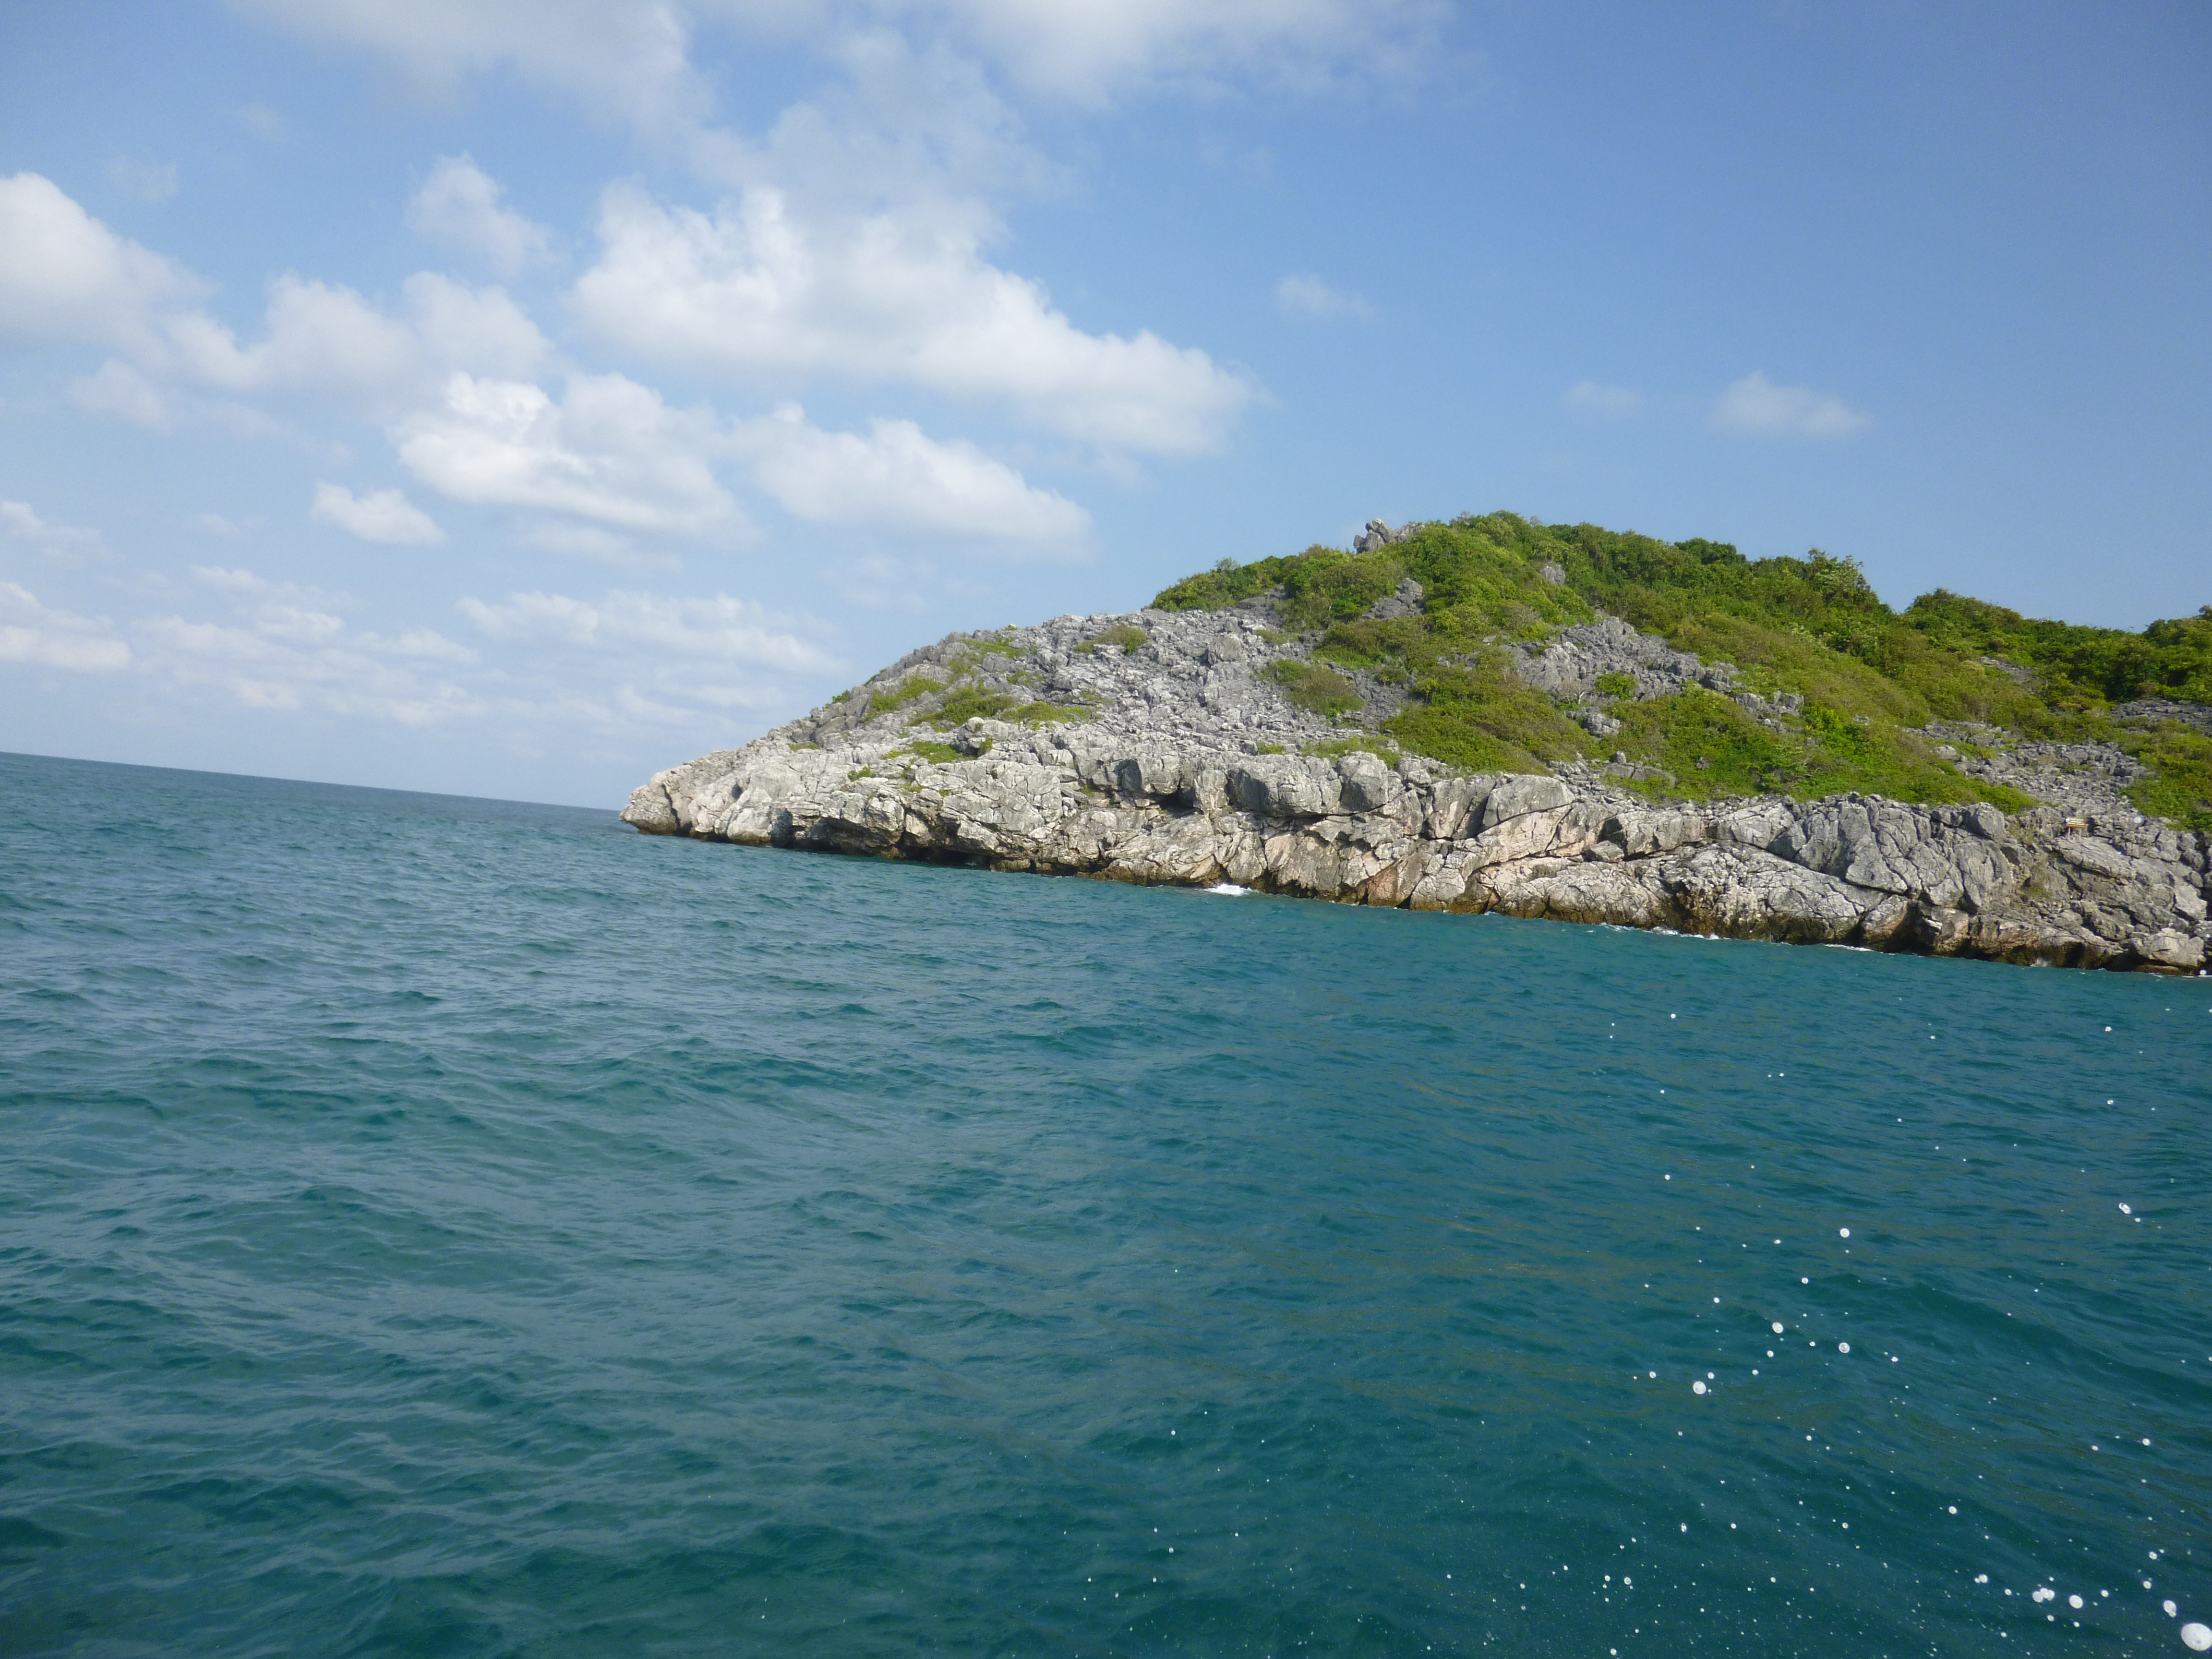 The island photo